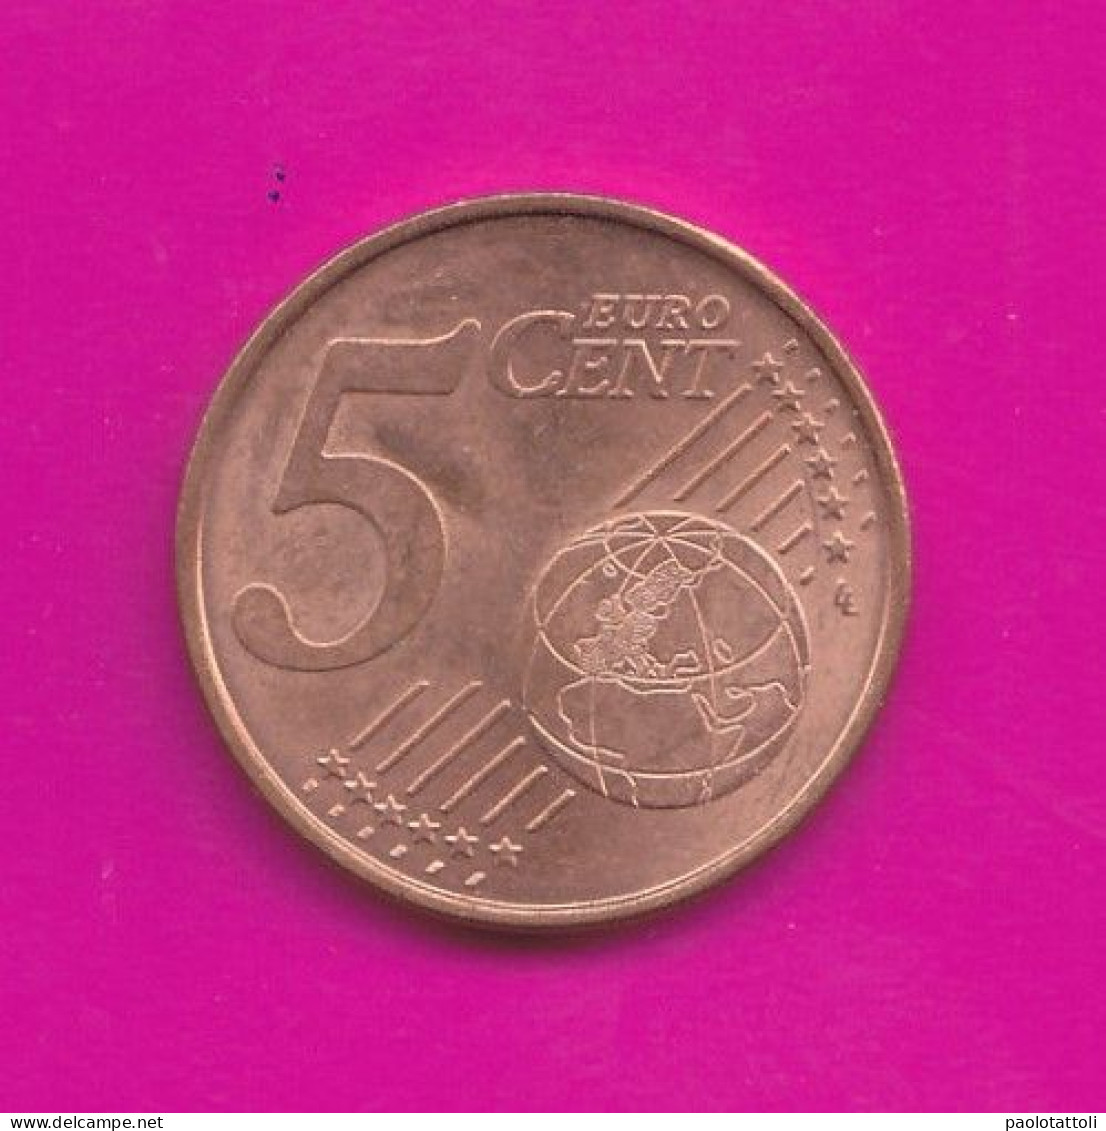 Spain, 2020- 5 Euro Cent- Nickel Brass- Obverse Sagrata Familia. Reverse Denomination- SPL, EF, SUP, VZ- - Espagne